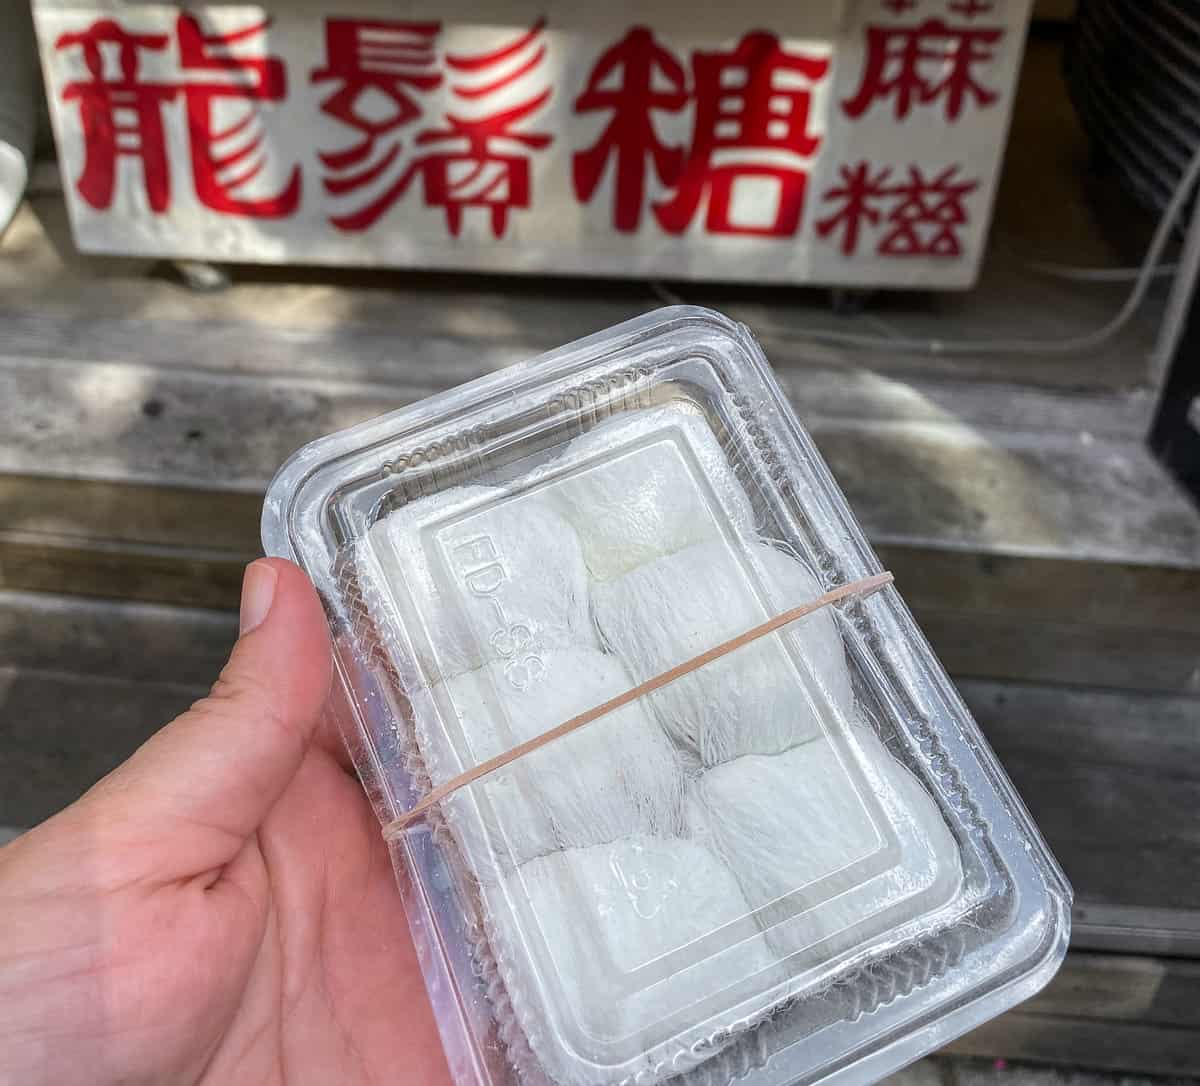 Plastic box with white, spun sugar candies inside.